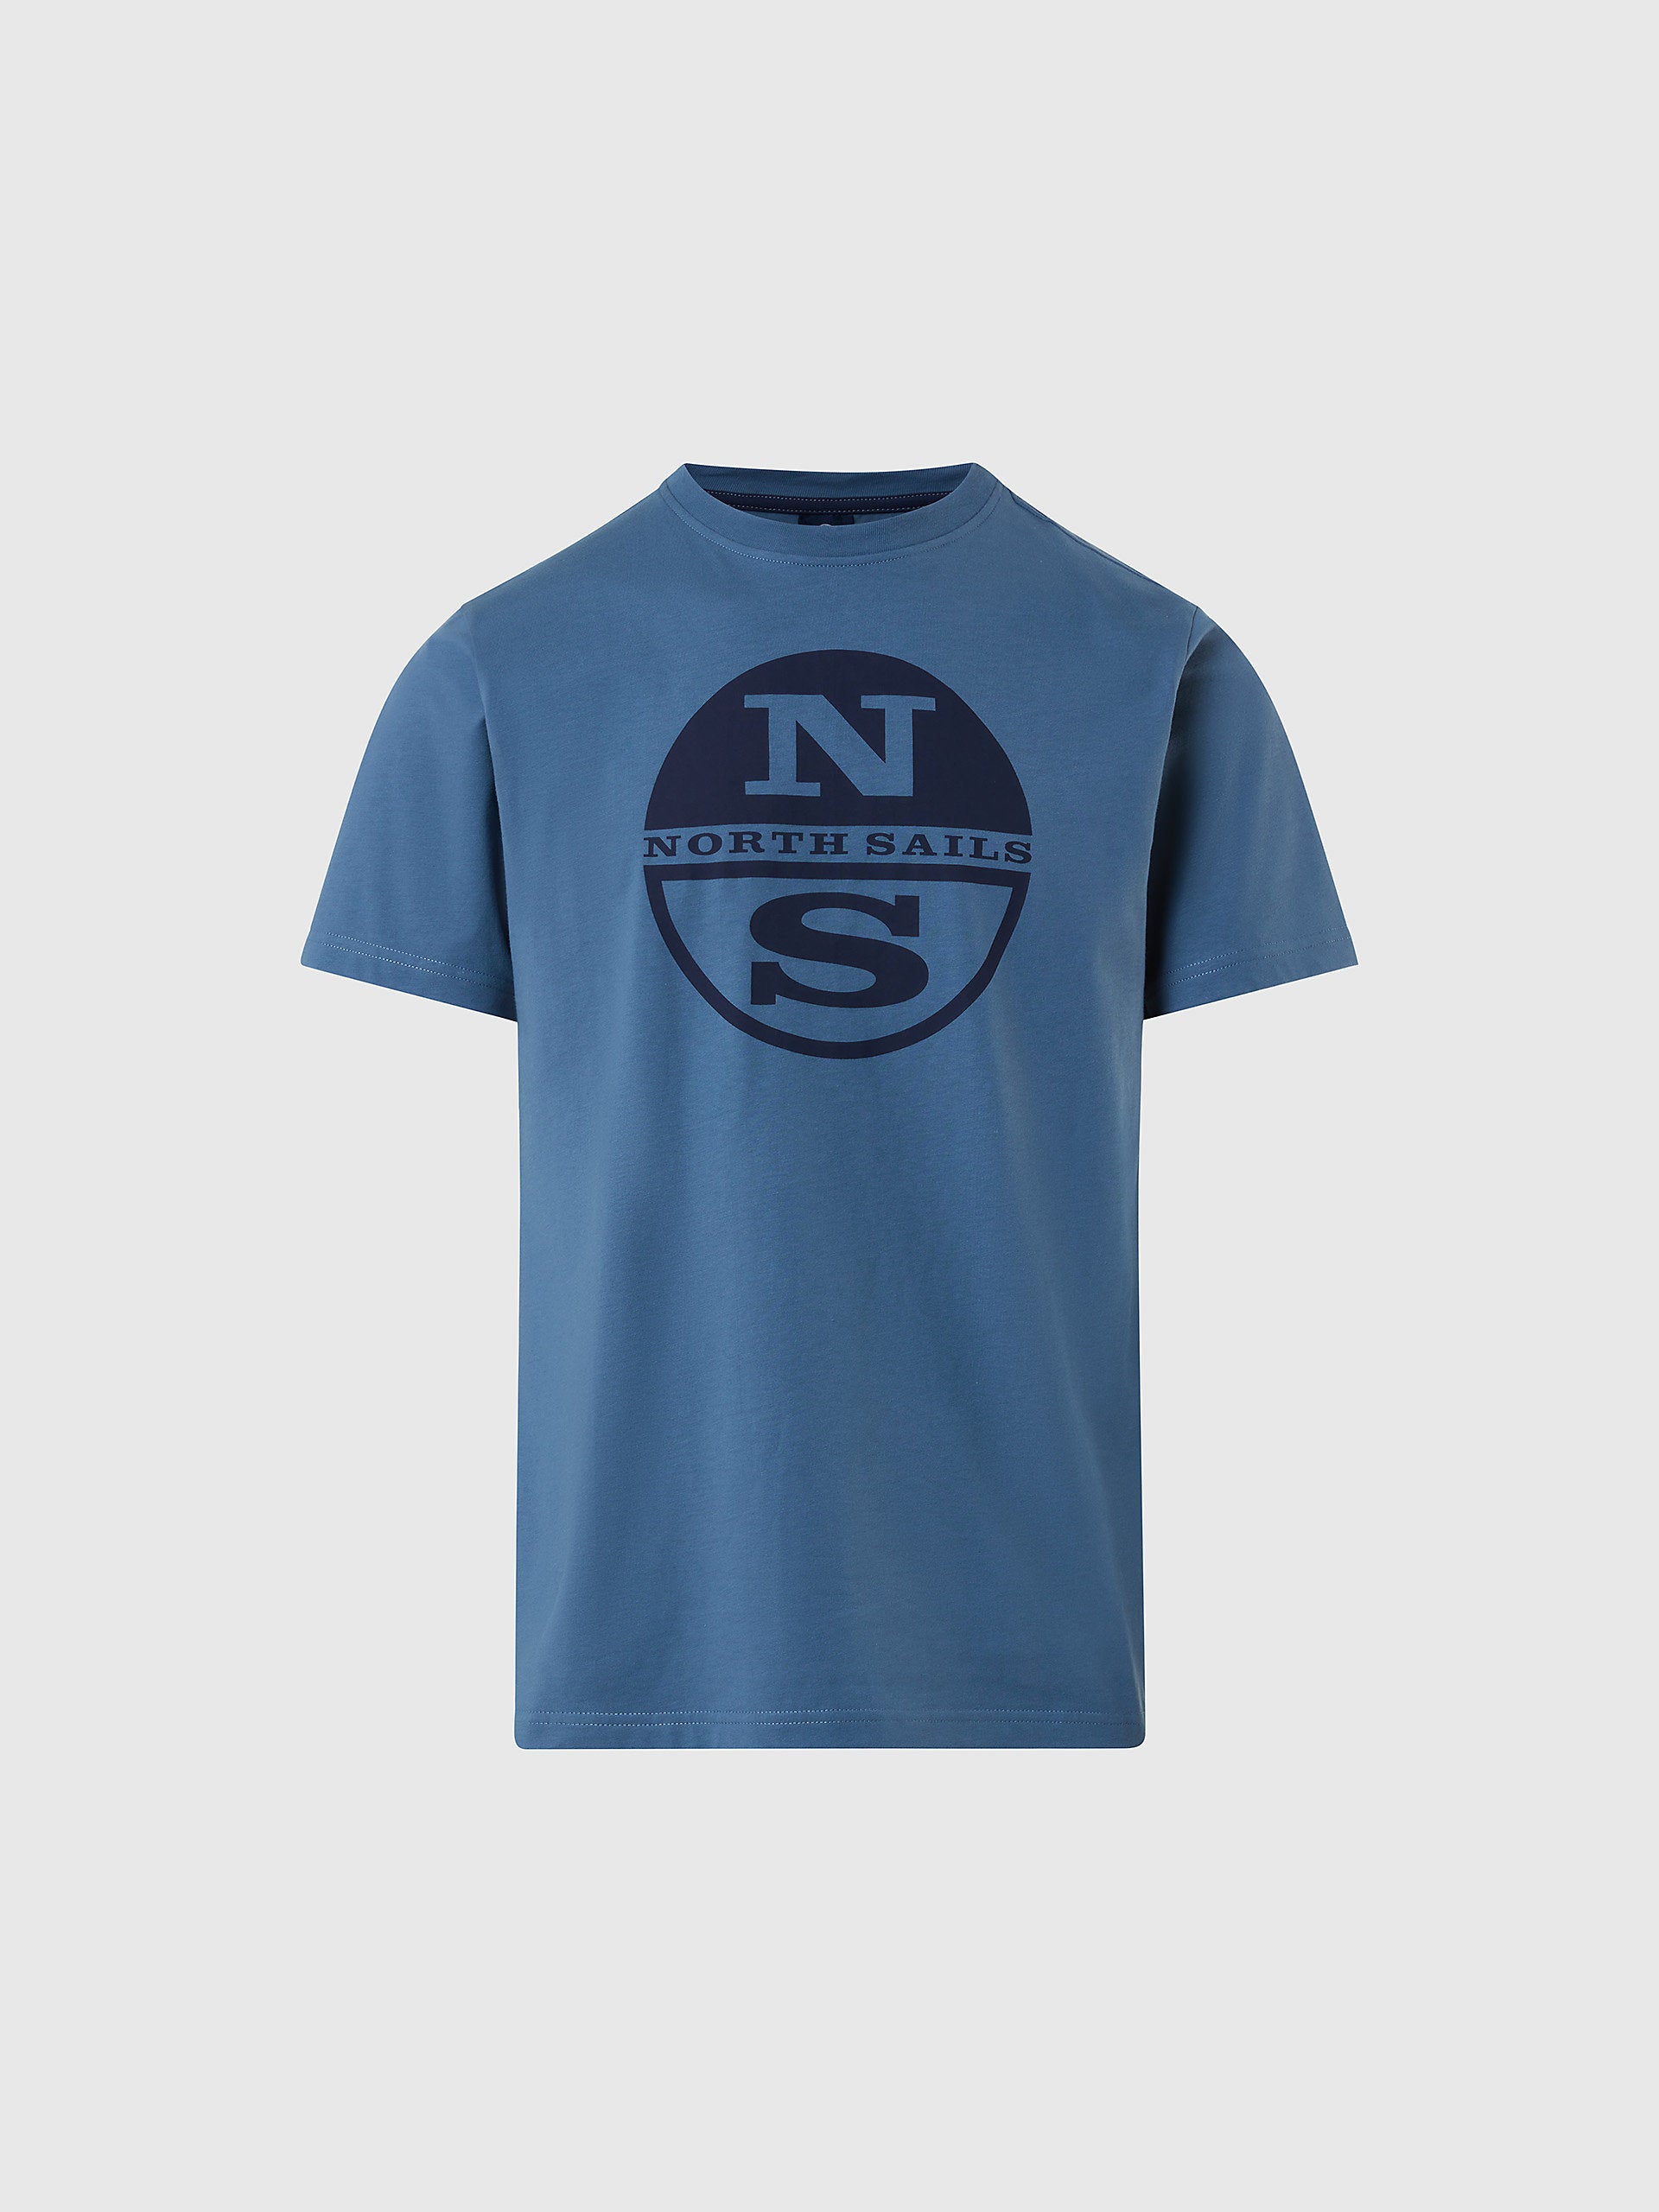 North Sails - T-shirt with logo printNorth SailsWinter seaM